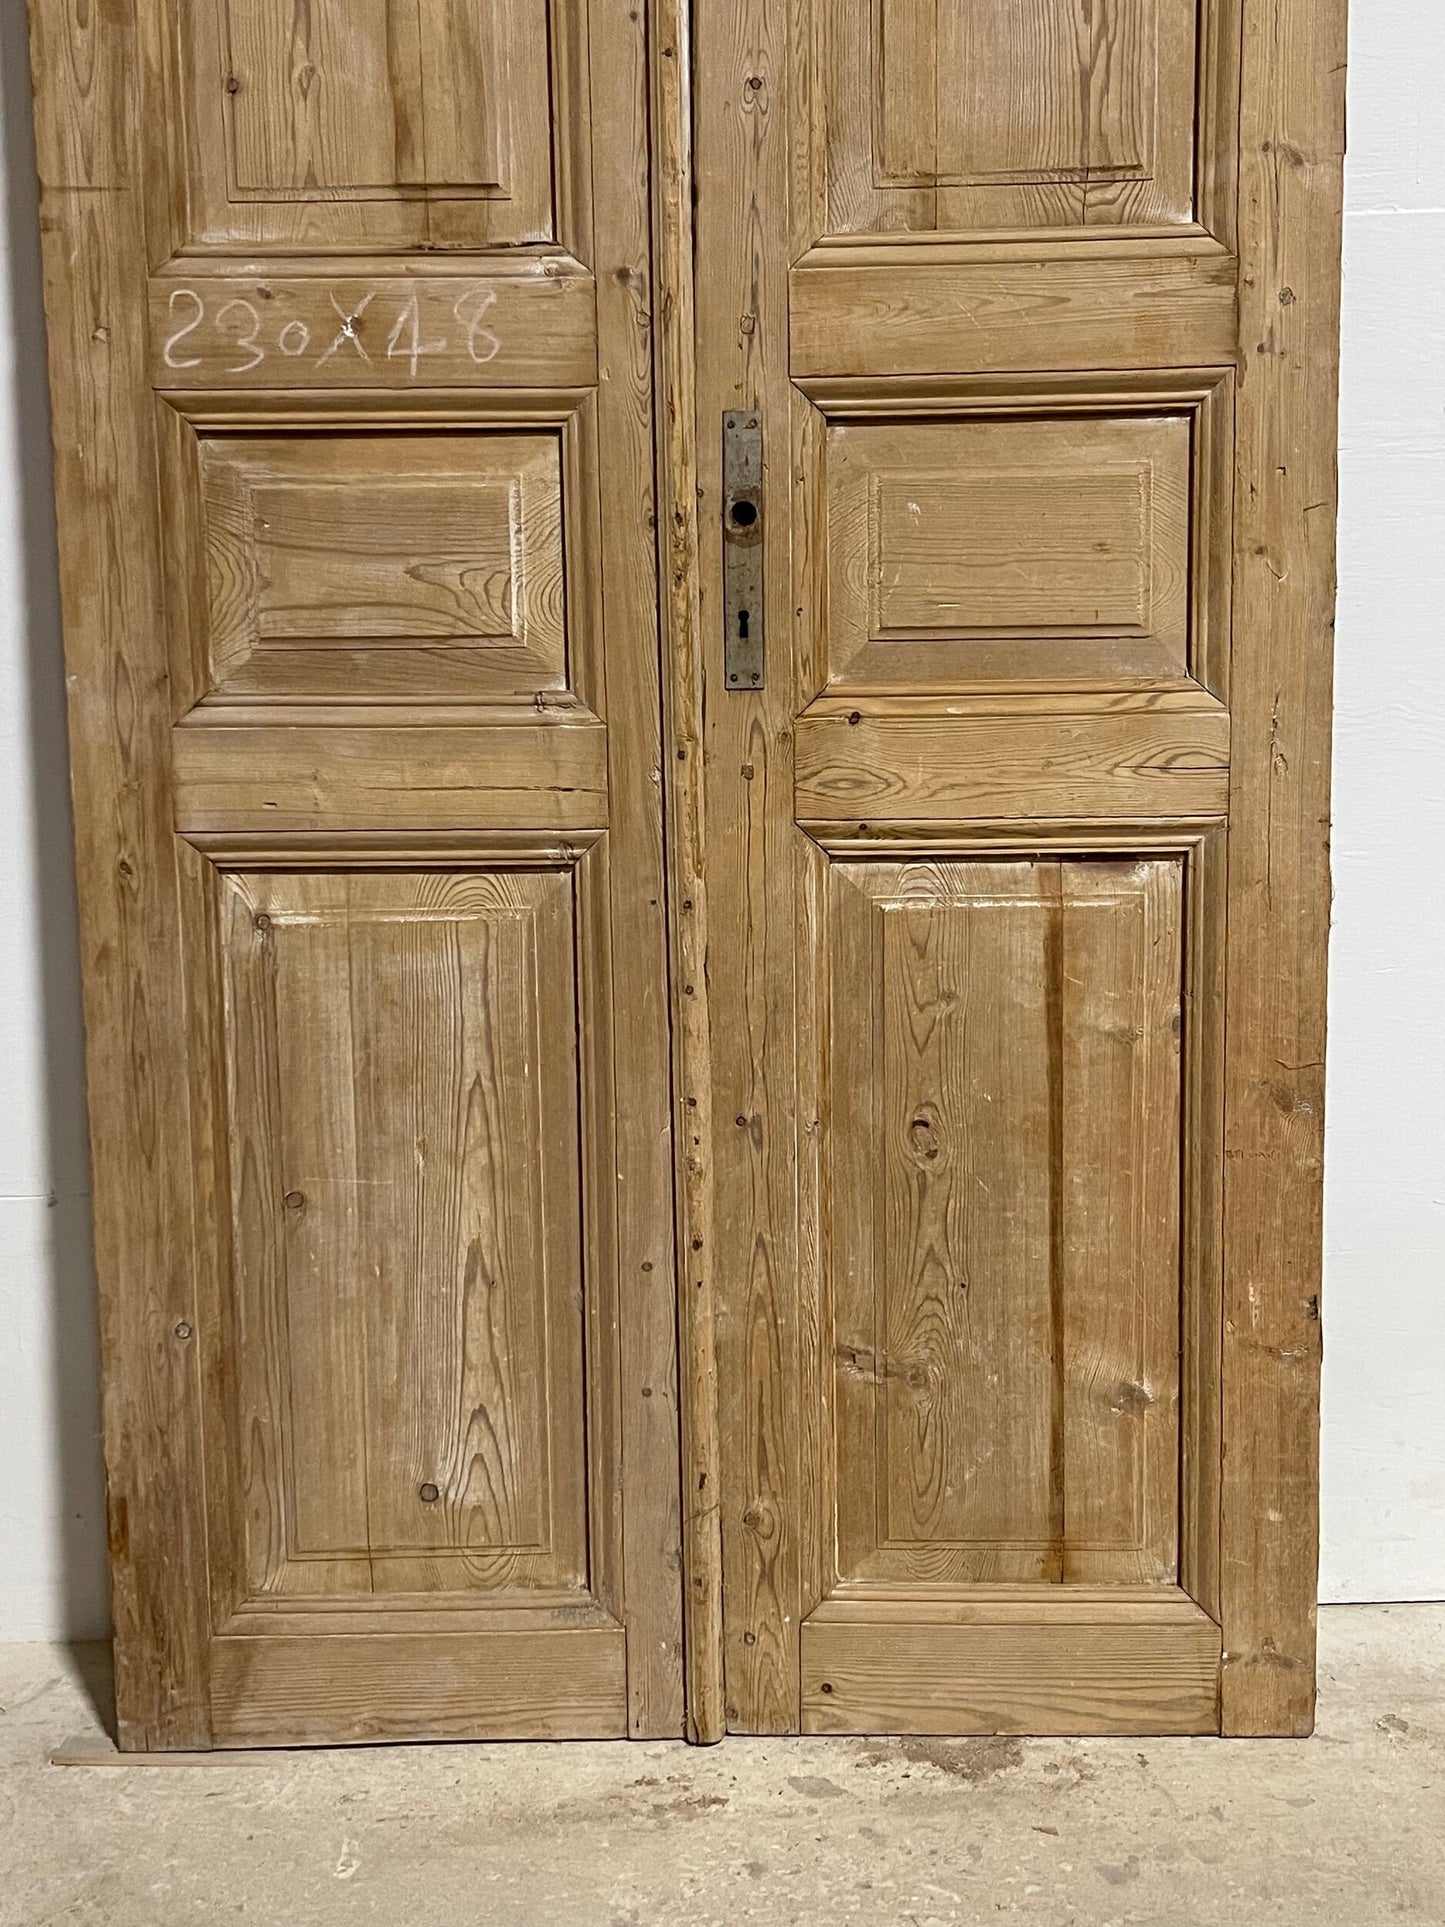 Antique French panel doors (90.5x38.75) I124